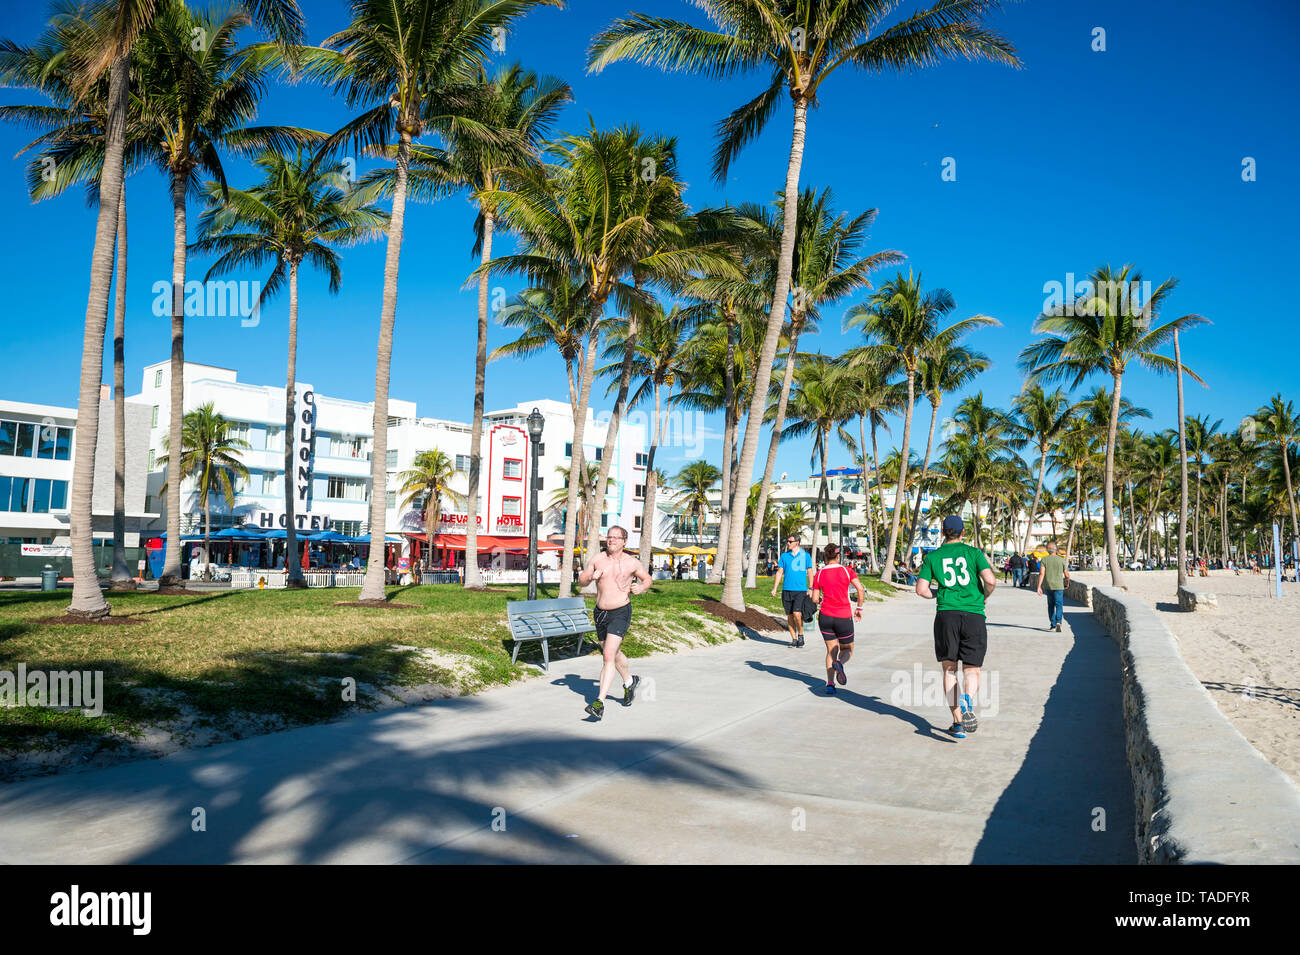 MIAMI - DECEMBER 27, 2017: Morning joggers and pedestrians share the beachfront boardwalk promenade at Lummus Park in South Beach. Stock Photo